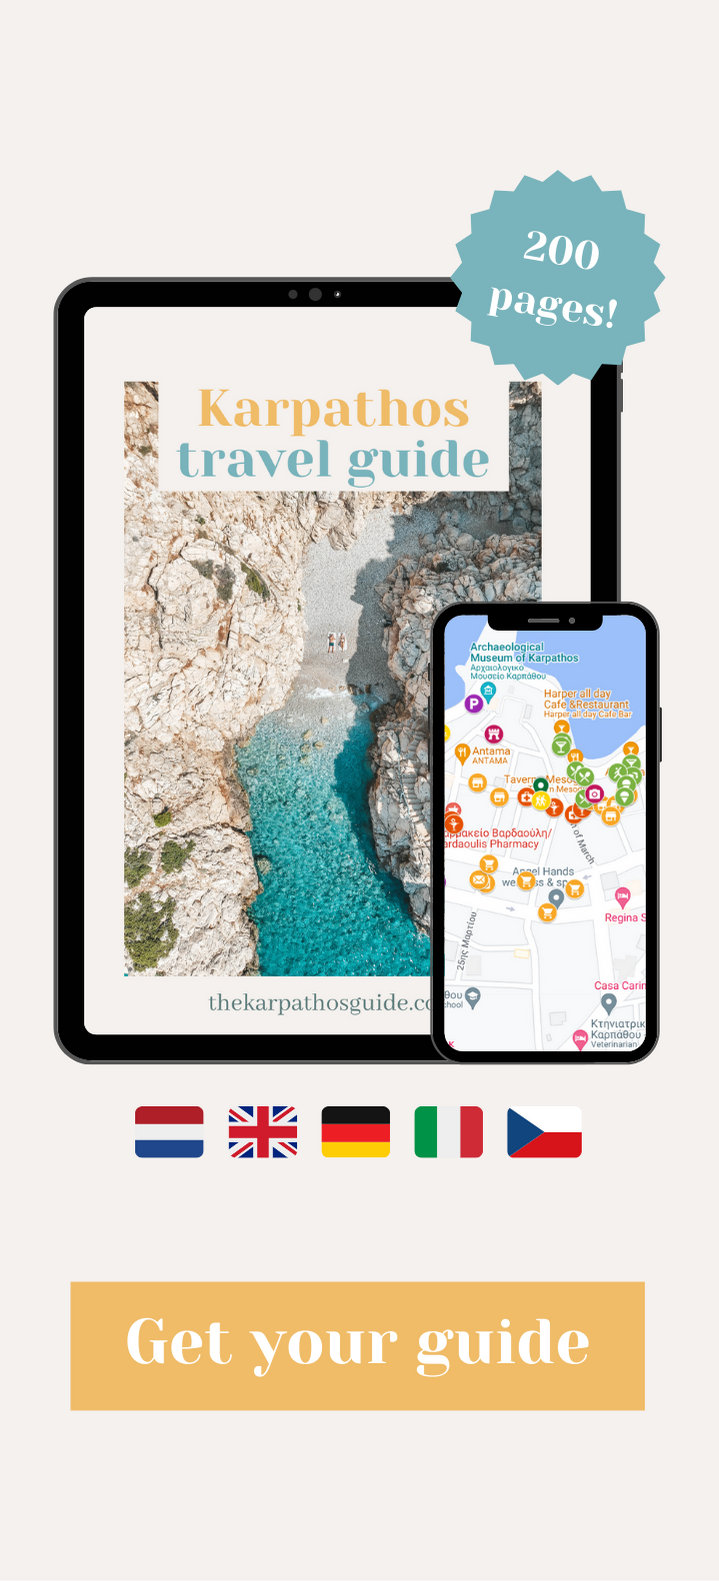 Karpathos travel guide